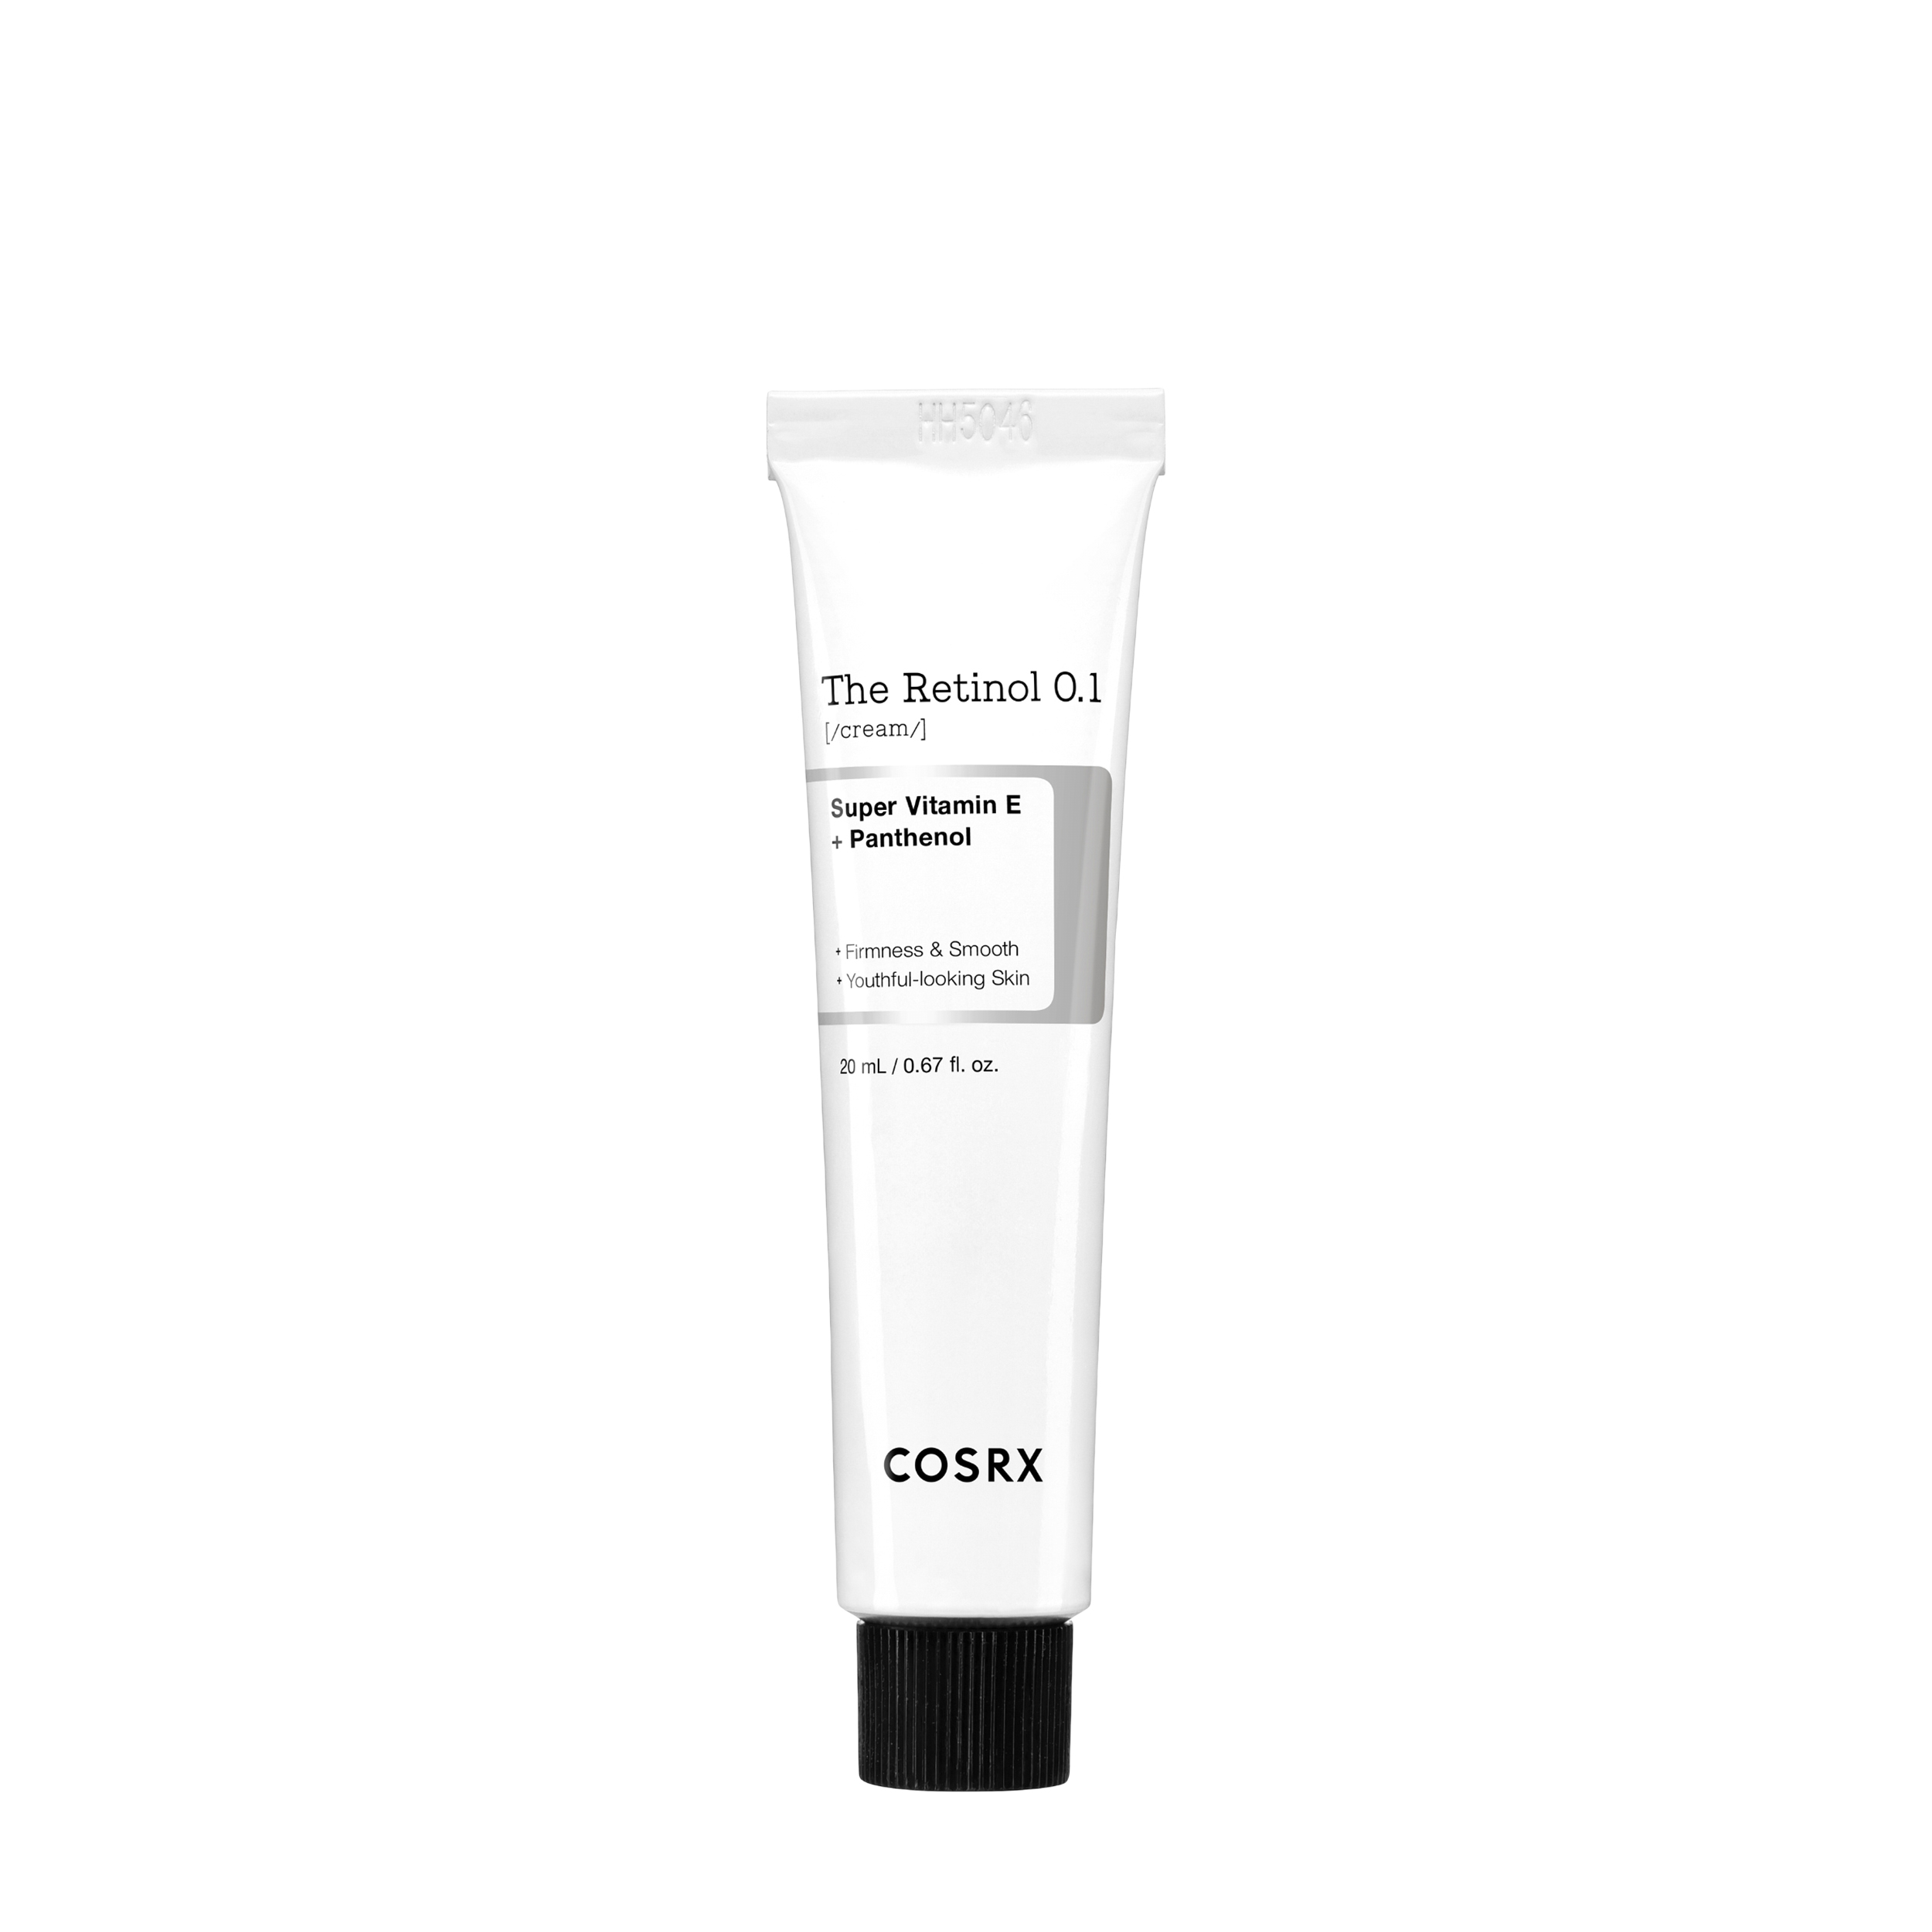 COSRX COSRX The Retinol 0.1 cream Успокаивающий   крем с 0,1% ретинола 8809598454781 - фото 1